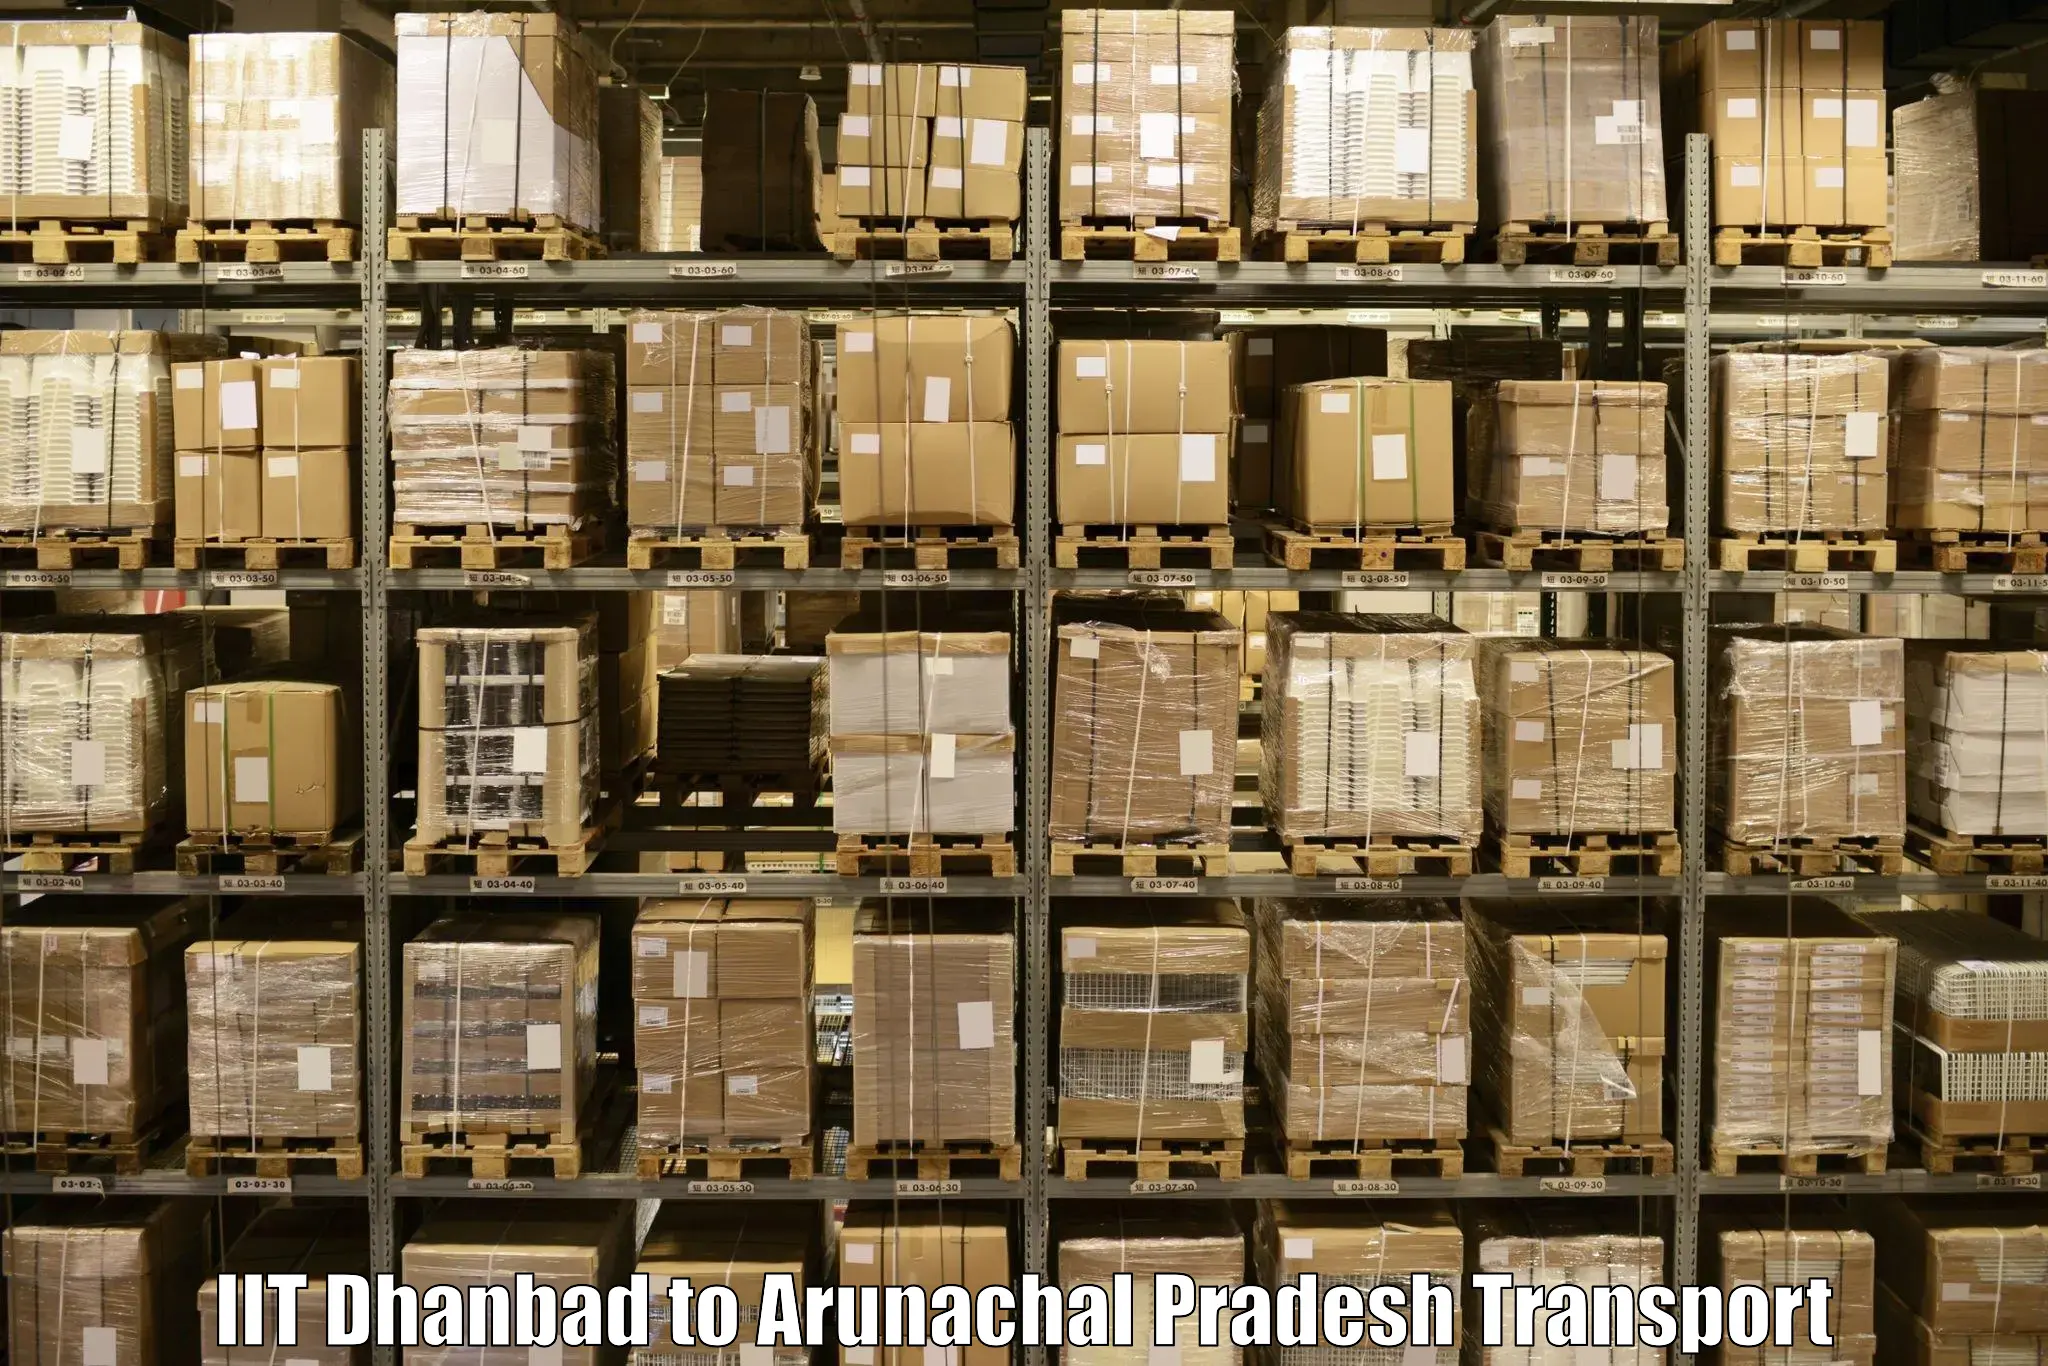 Goods delivery service IIT Dhanbad to Arunachal Pradesh